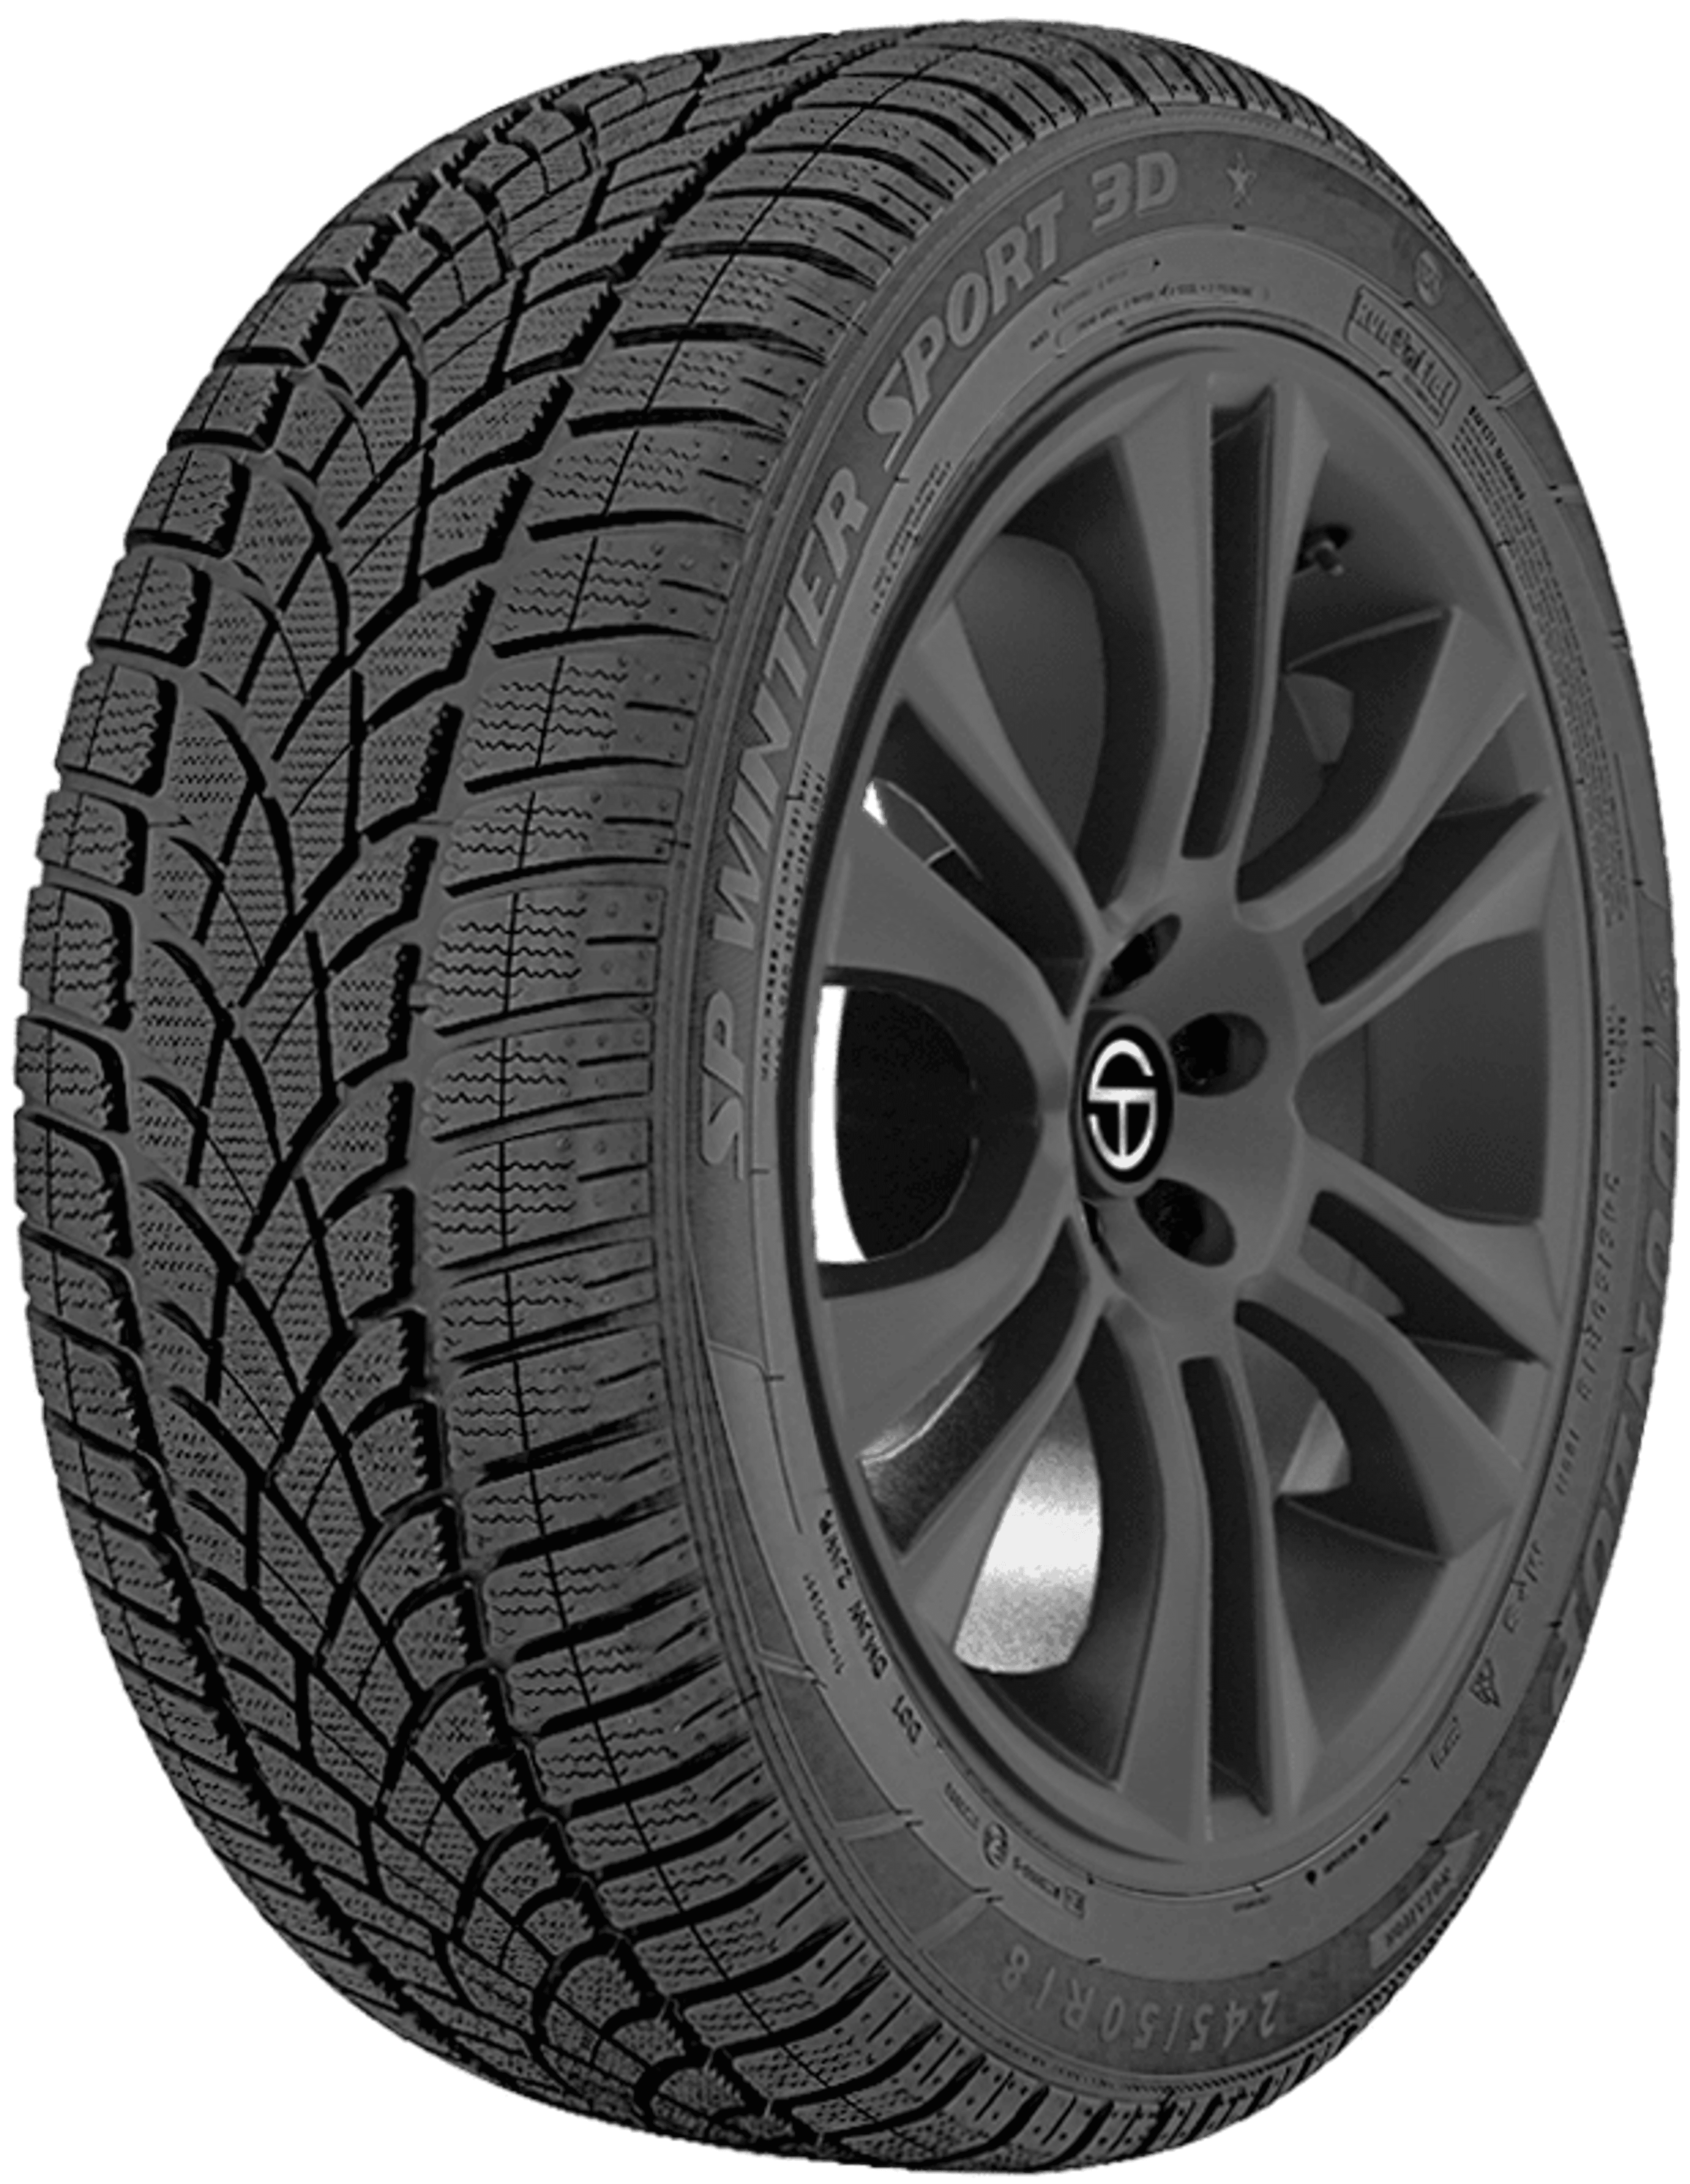 Buy Dunlop SP Winter Sport 3D Tires Online | SimpleTire